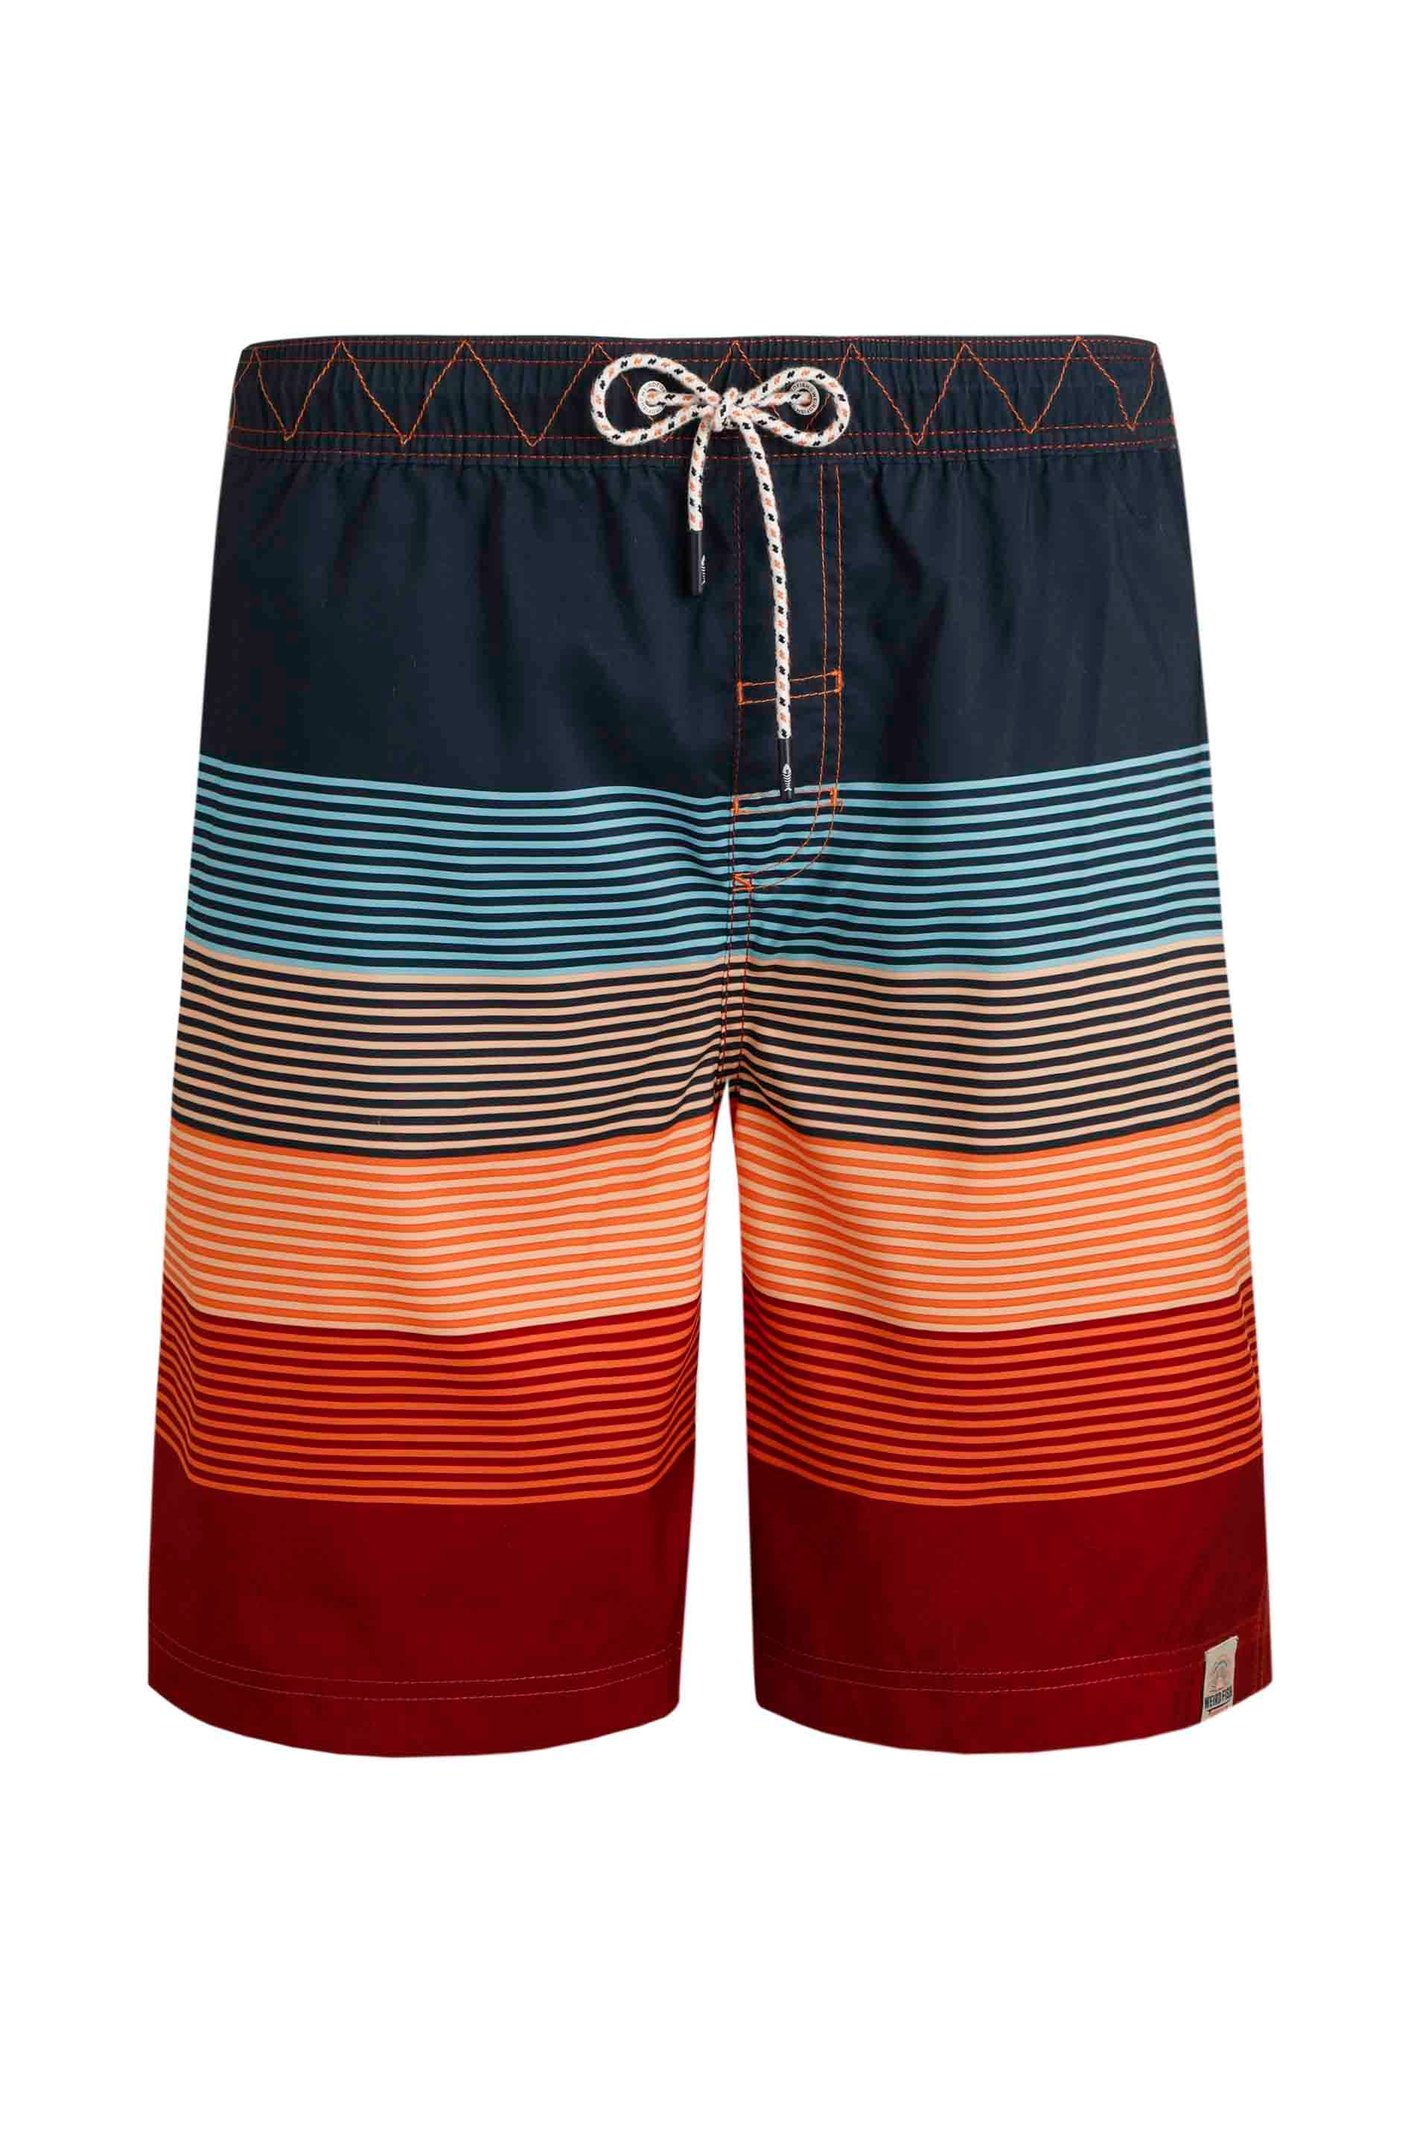 Weird Fish Lucknow Striped Board Shorts Mango Size 34